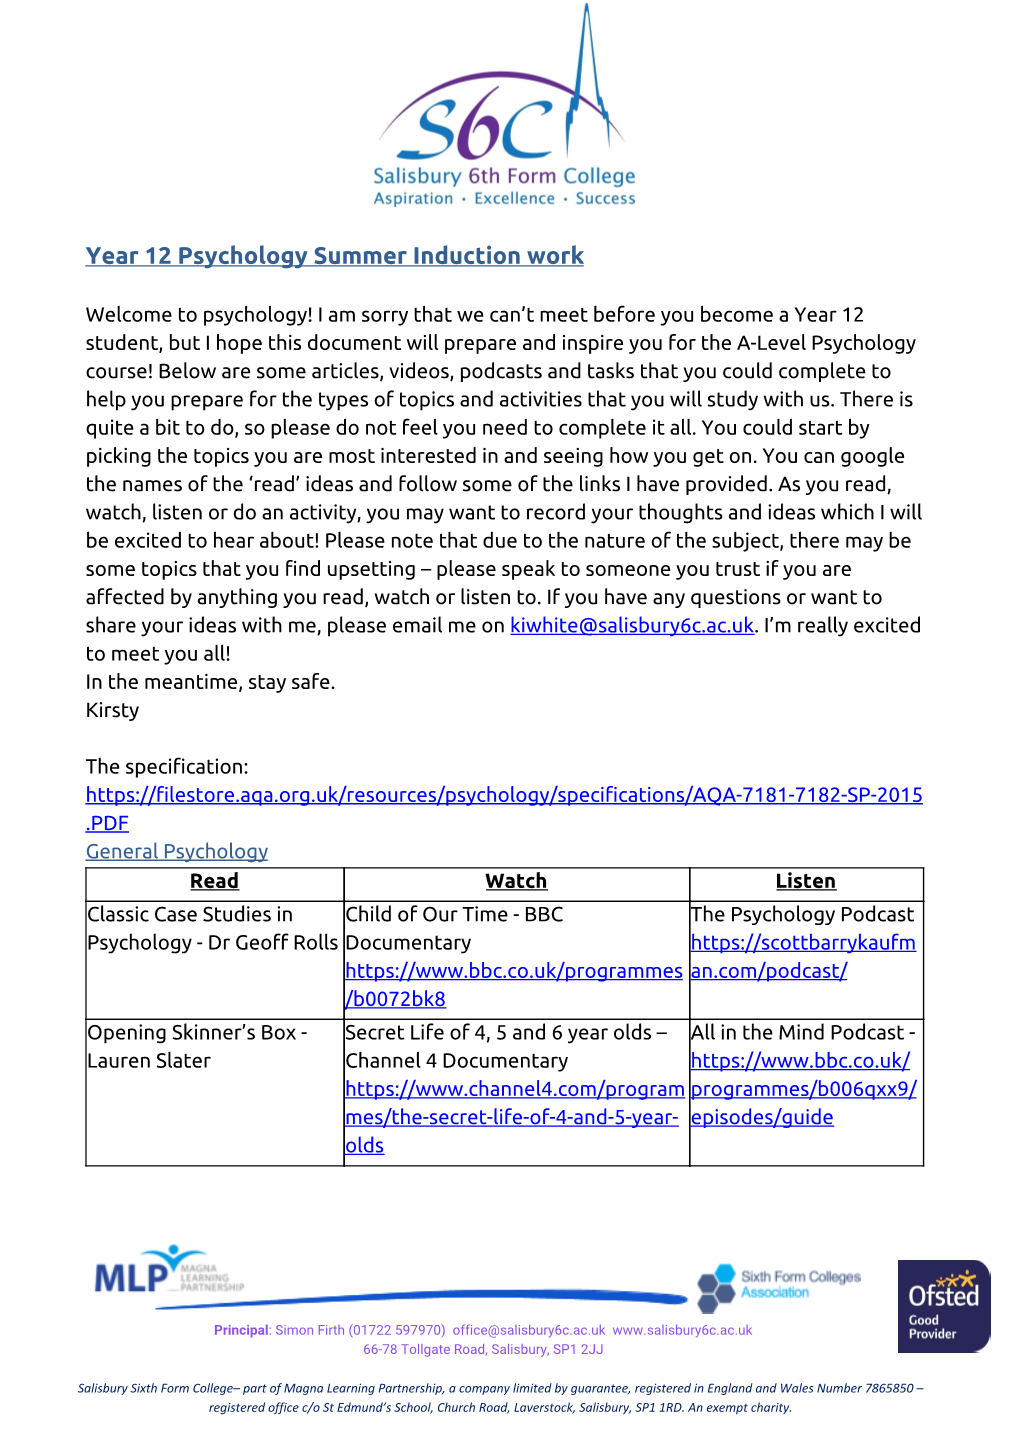 Year 12 Psychology Summer Induction Work